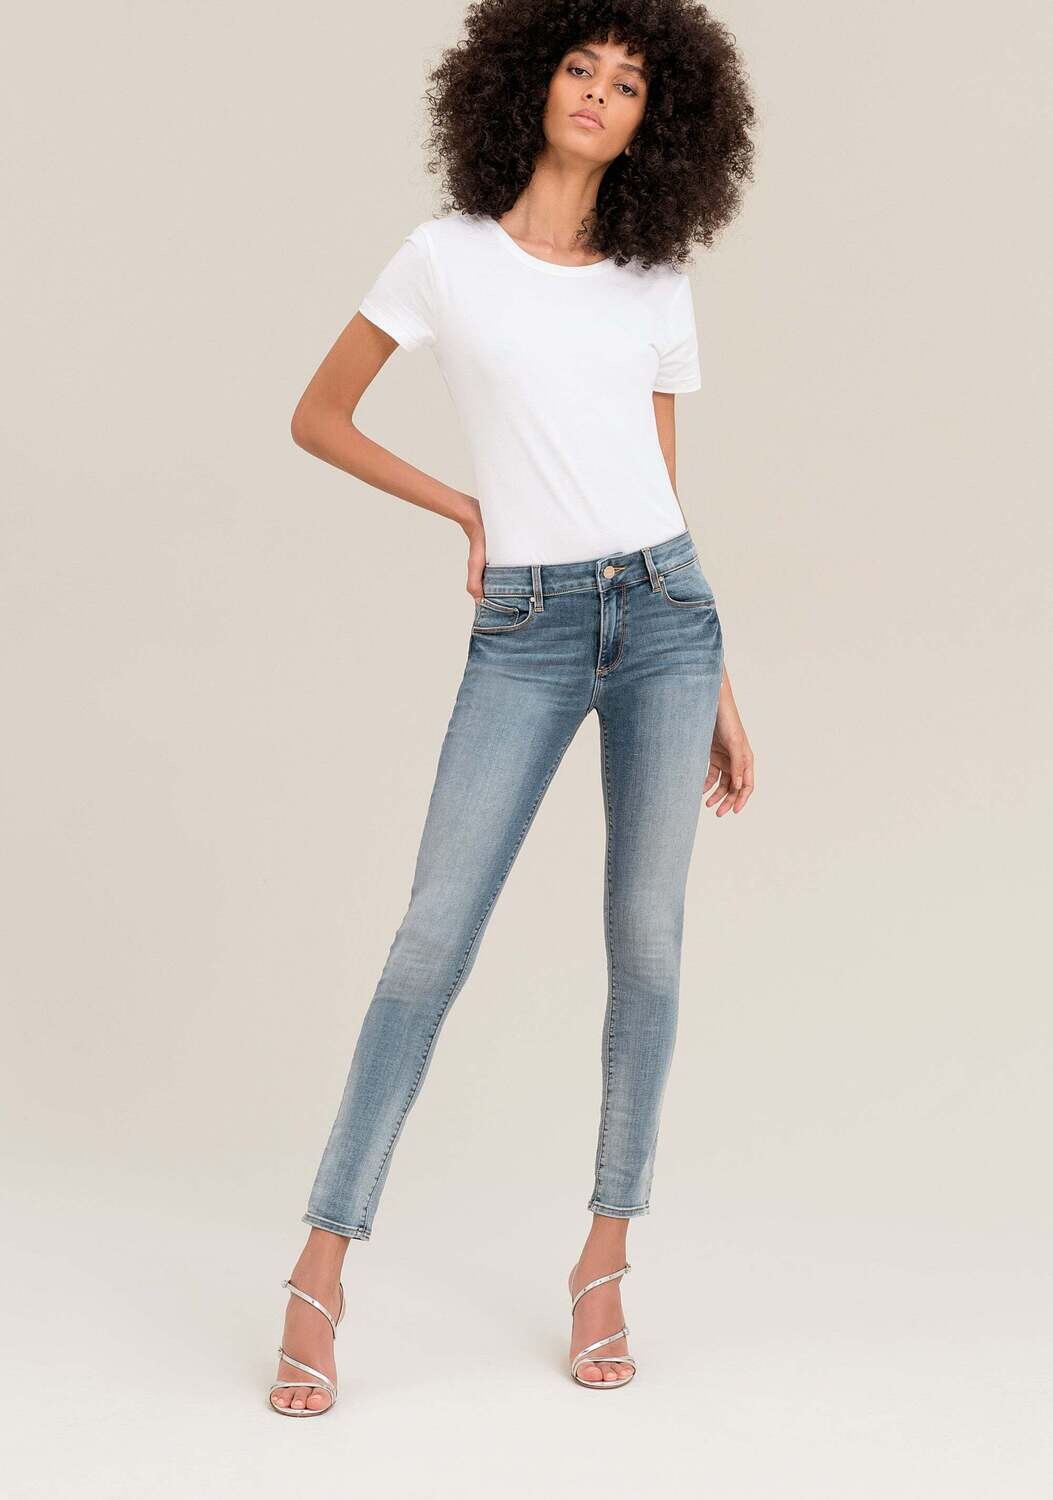 Jeans bella skinny shape up